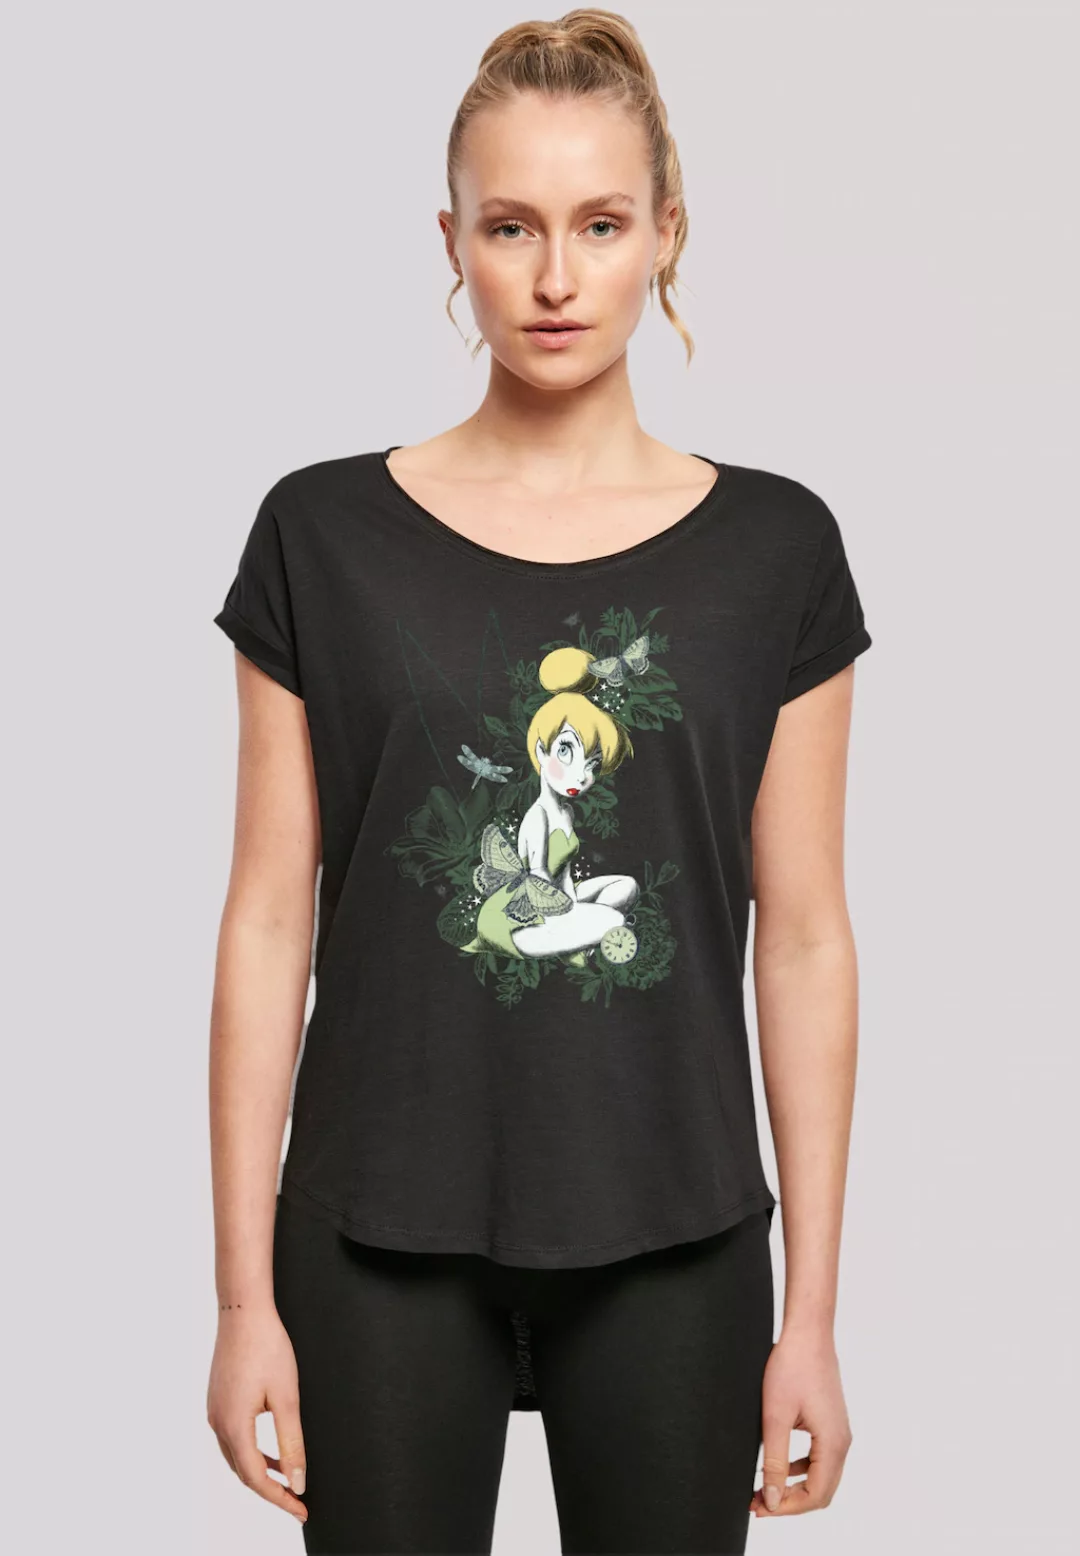 F4NT4STIC T-Shirt "Disney Peter Pan Fairy Good Life", Premium Qualität günstig online kaufen